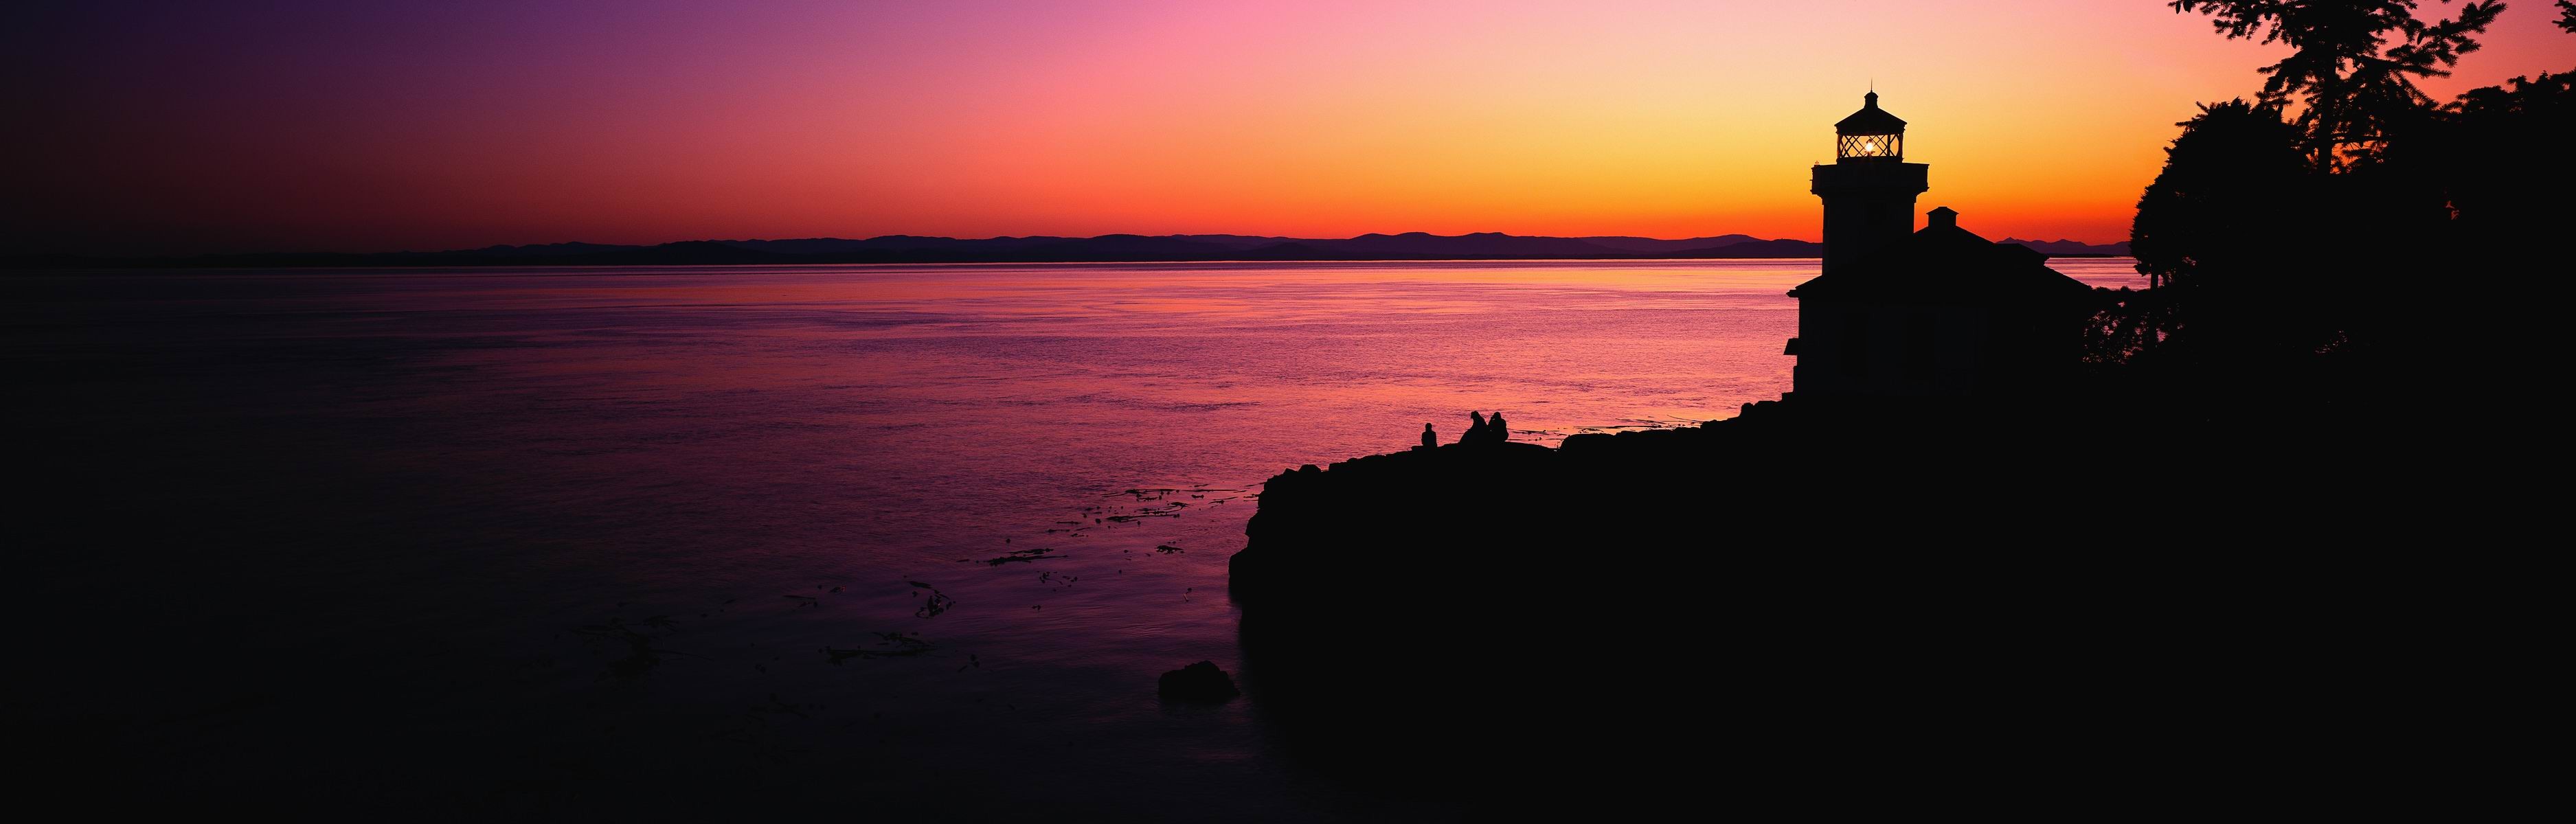 General 3750x1200 landscape orange sky sunset lighthouse silhouette coast bay sea dark outdoors sunlight